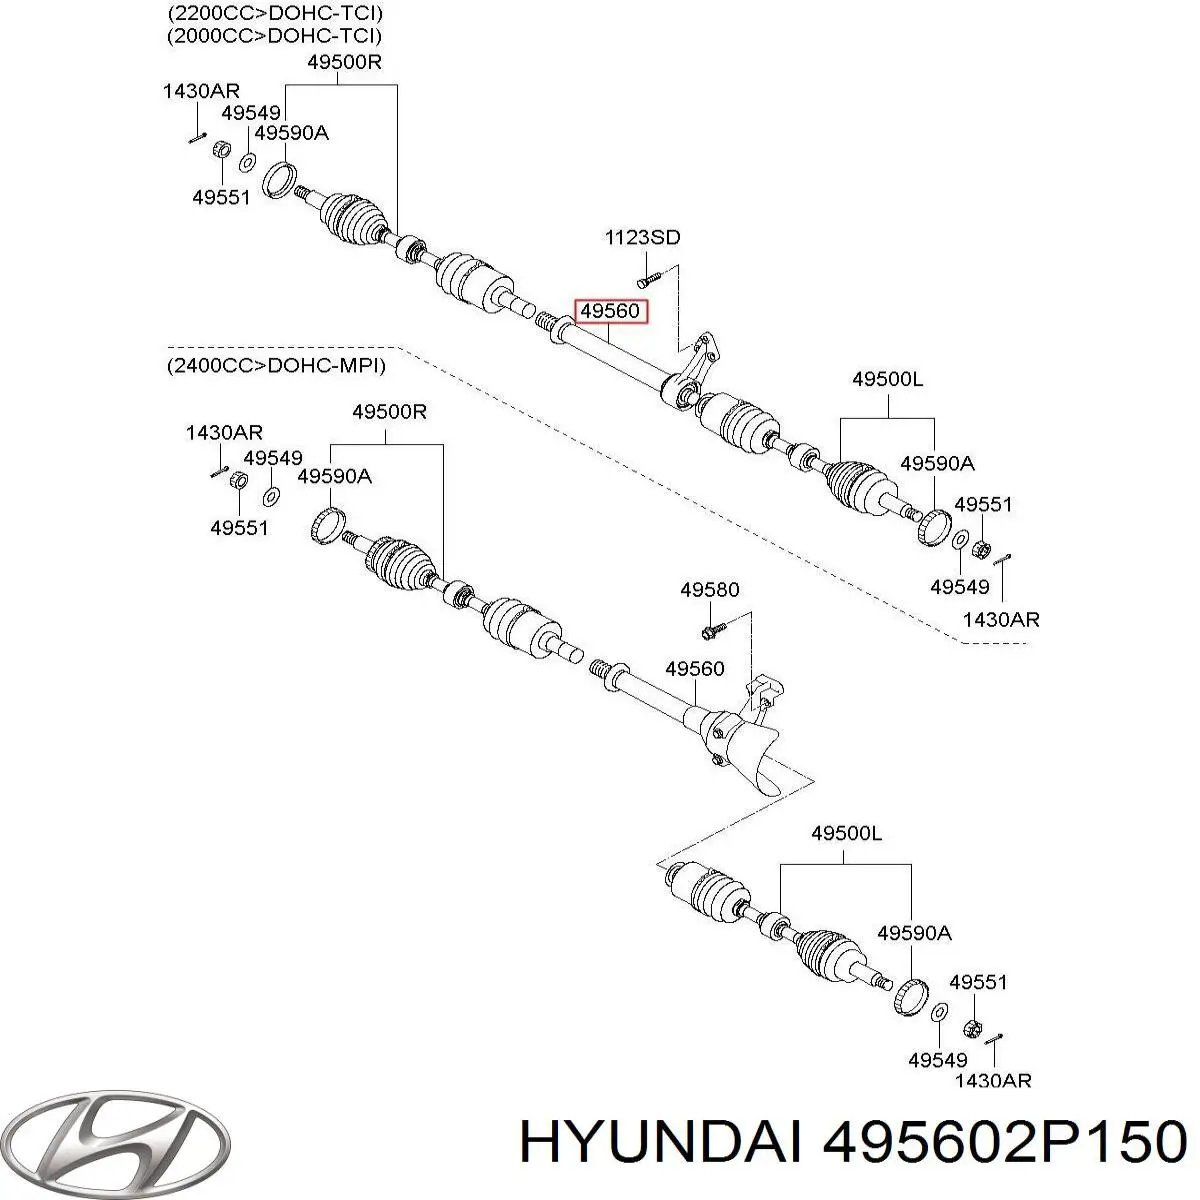 495602P150 Hyundai/Kia semieje de transmisión intermedio